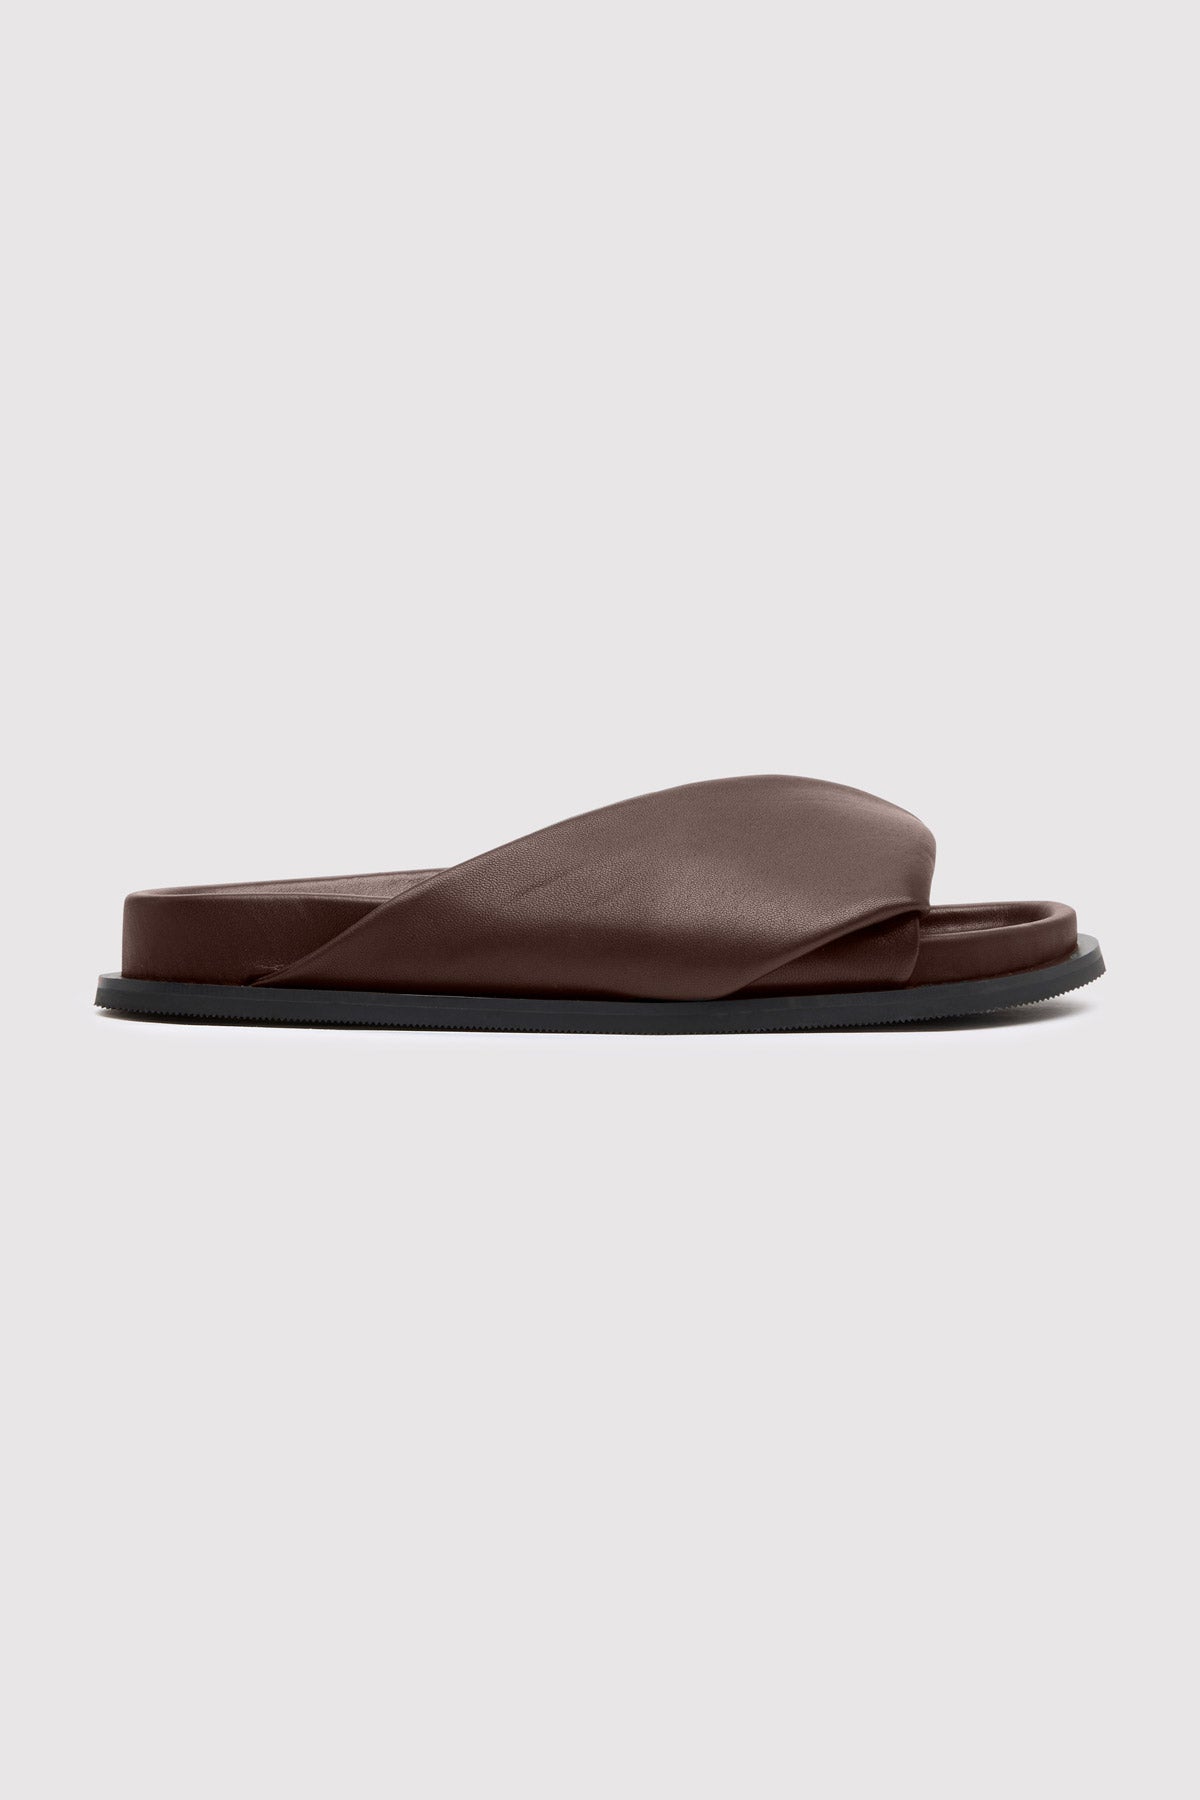 Fold Detail Slide - Chocolate